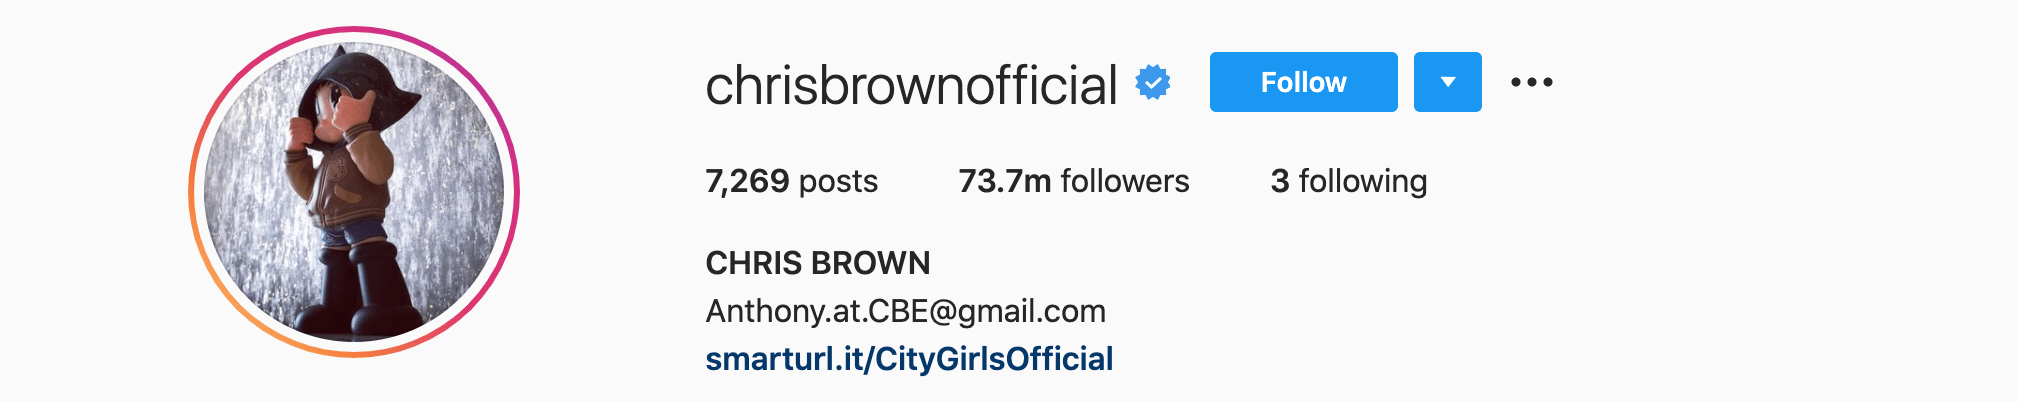 Top Instagram Influencers - CHRIS BROWN